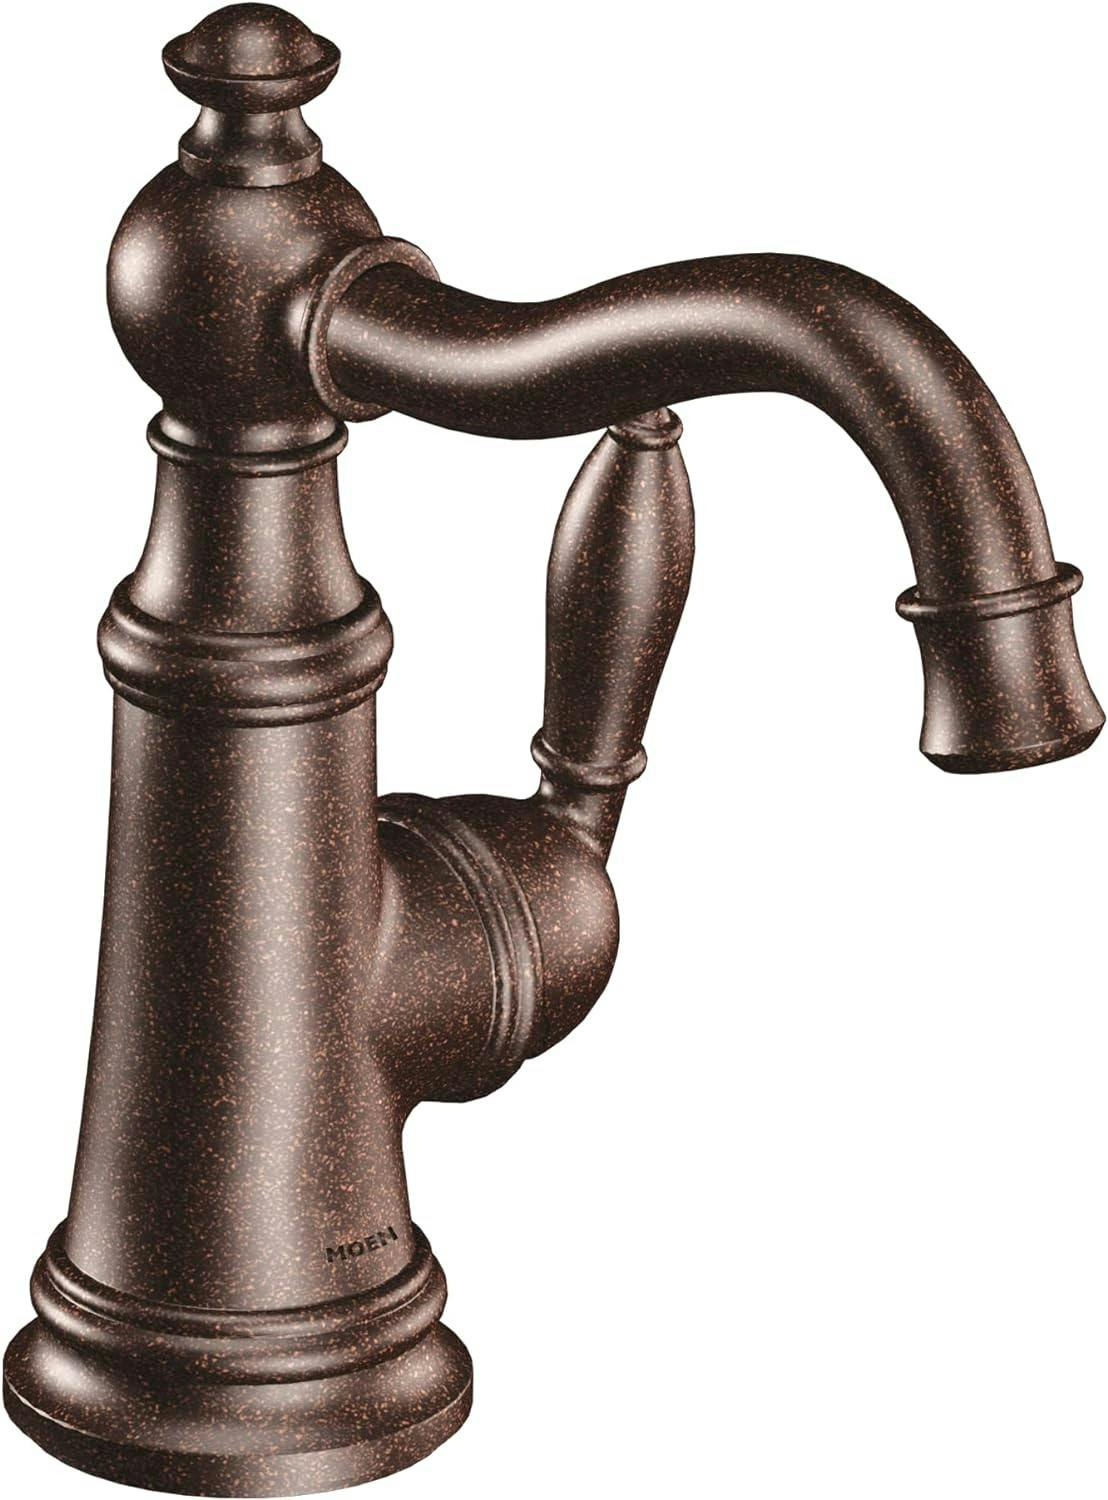 Elegant Victorian-Inspired Polished Nickel Single-Hole Bathroom Faucet